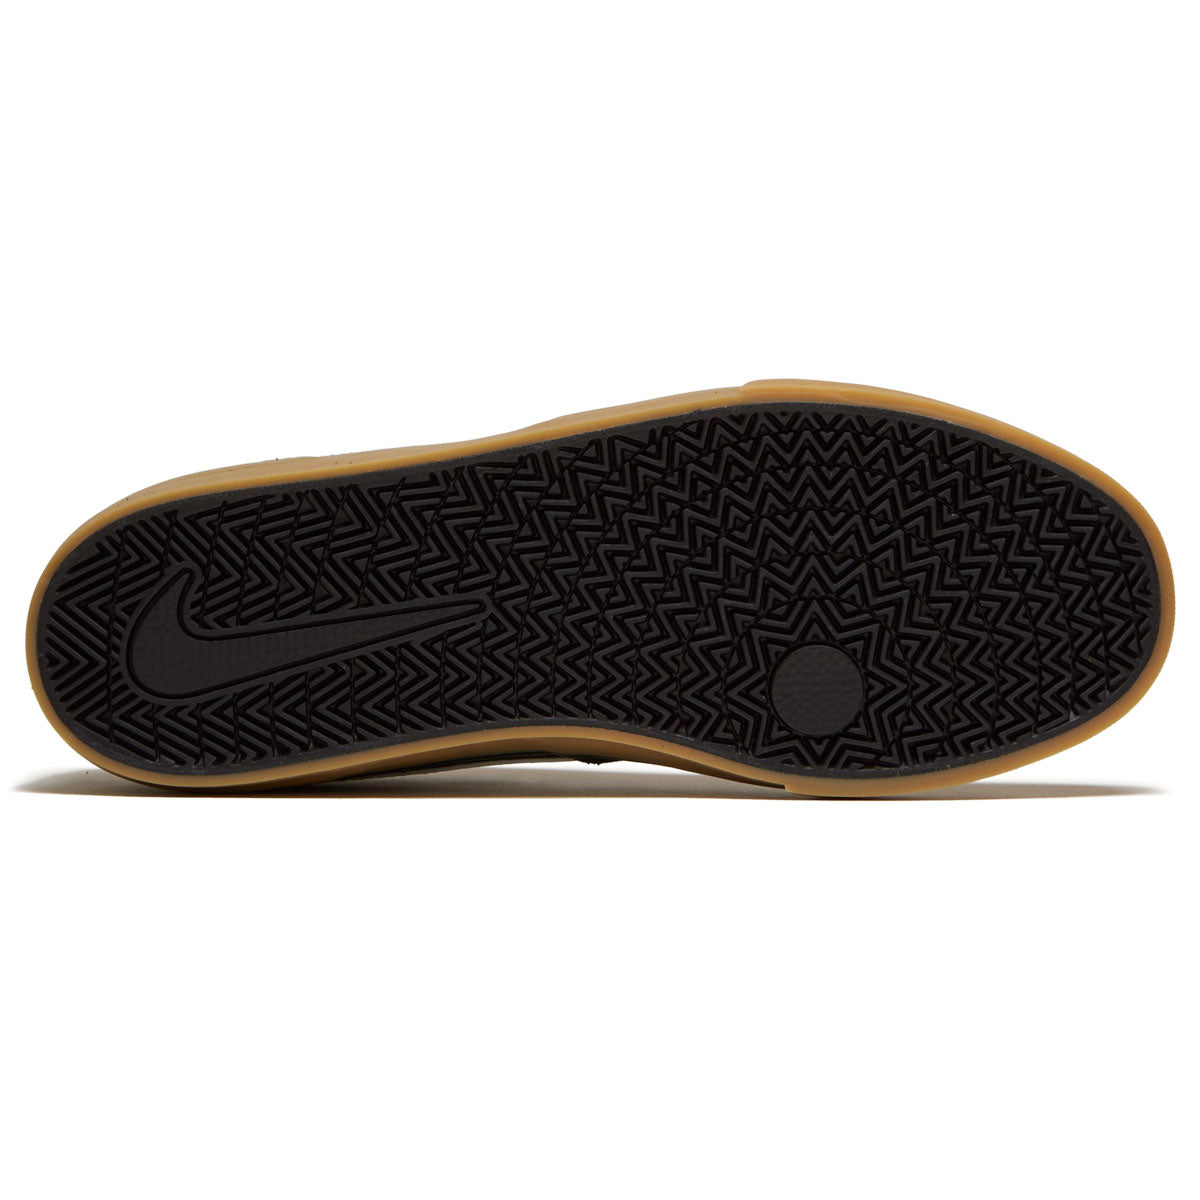 Nike SB Chron 2 Shoes - Black/White/Black/Gum Light Brown image 4